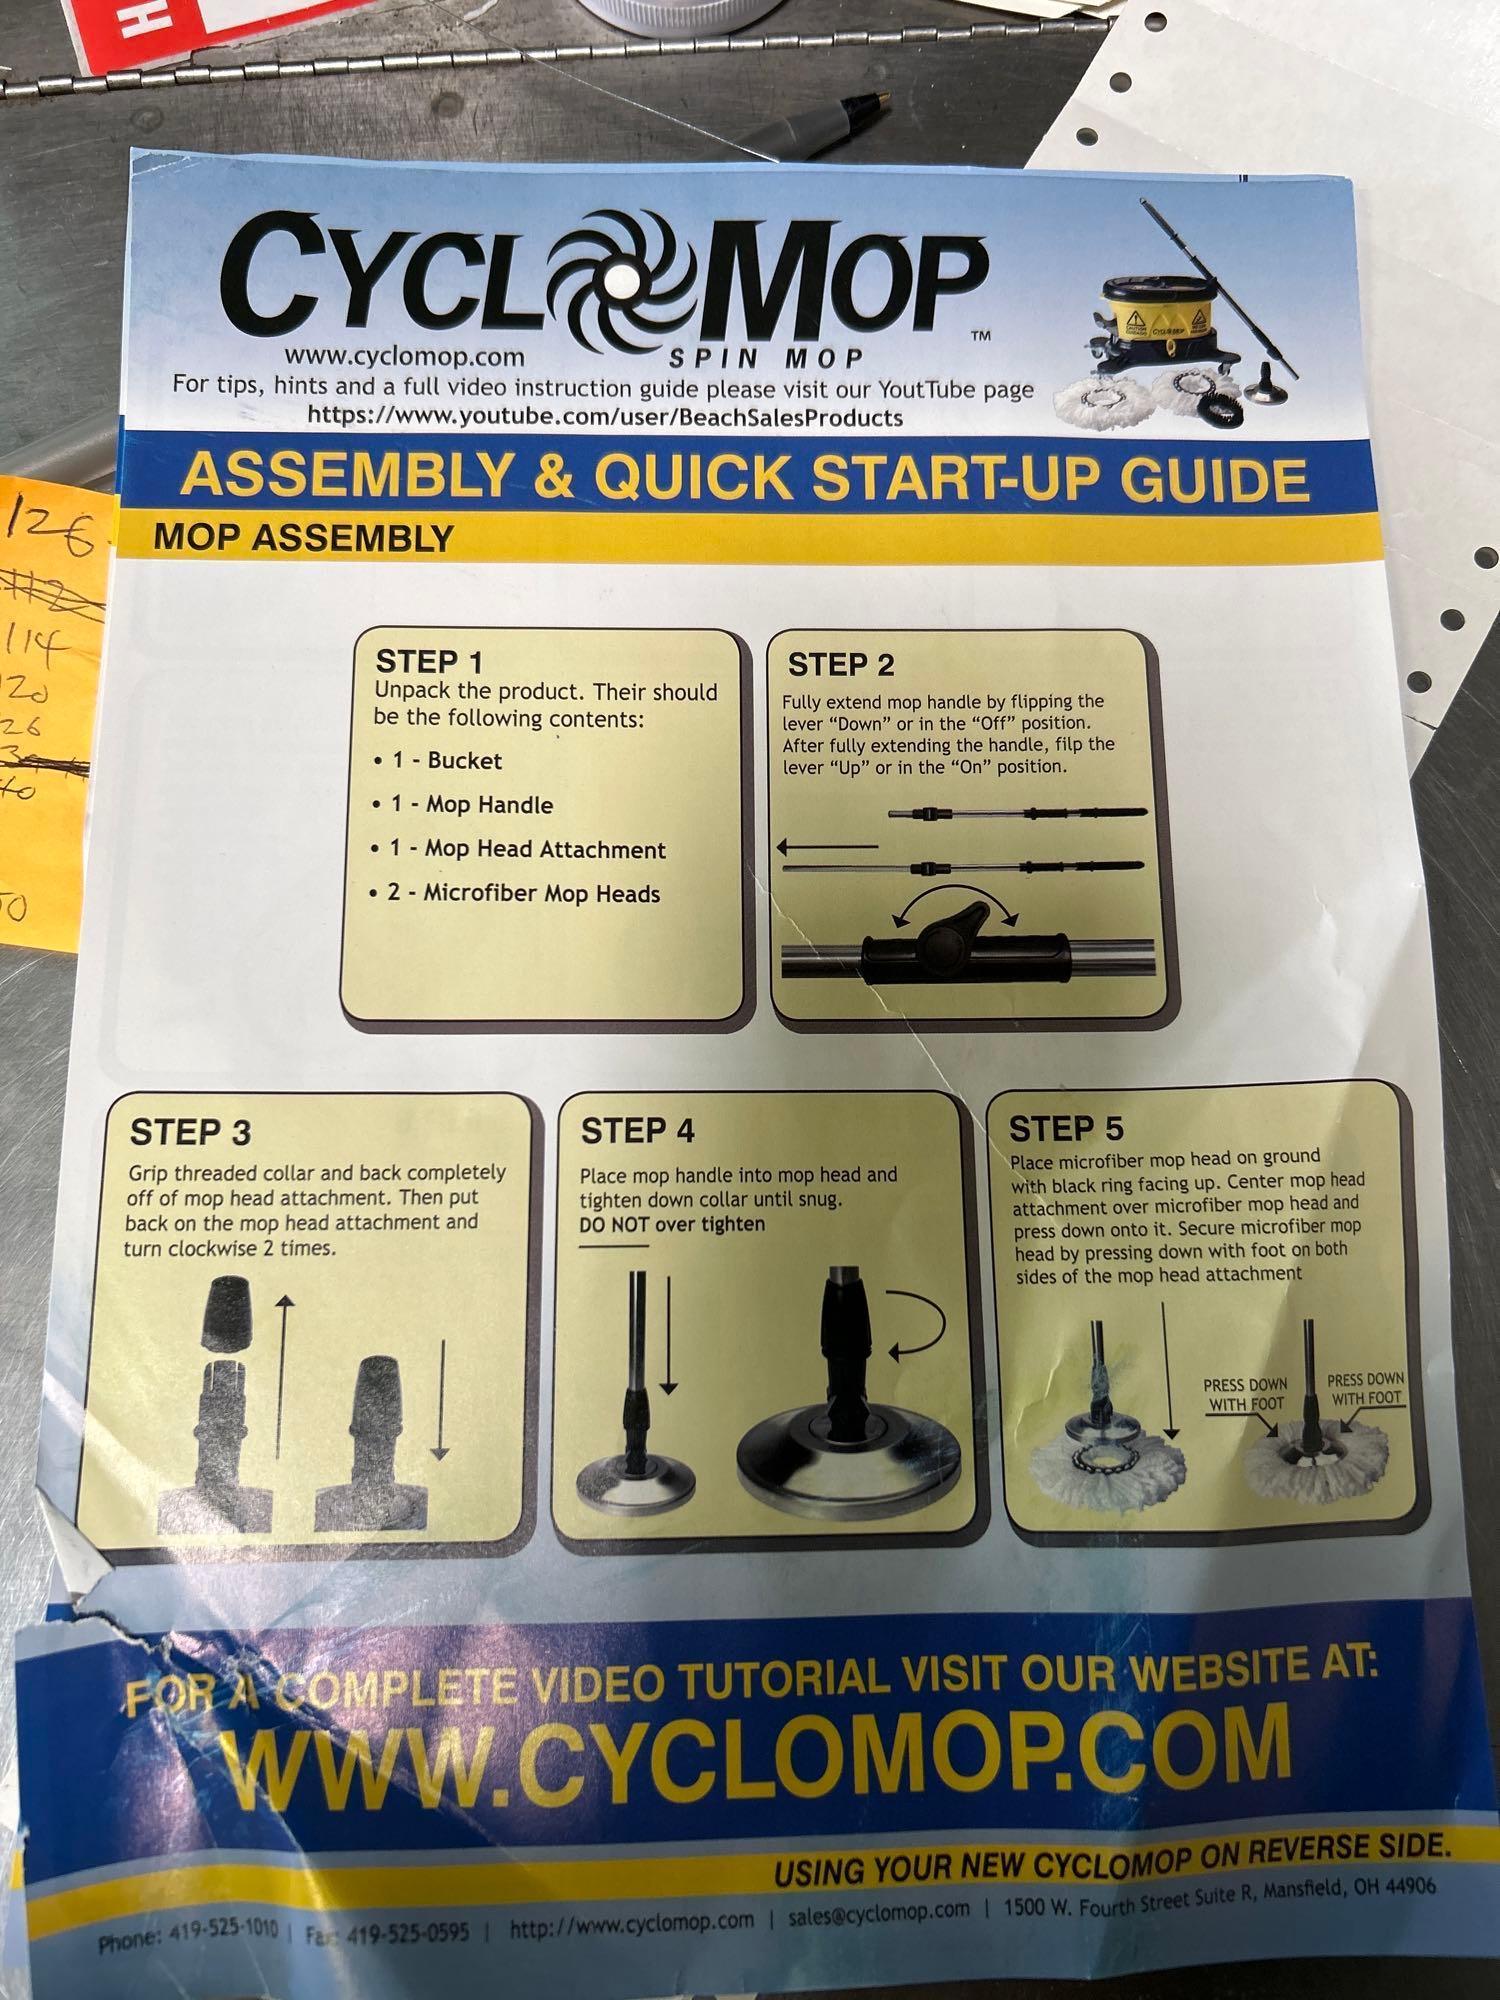 New CycloMop Mdl. CM500D Spin Mop